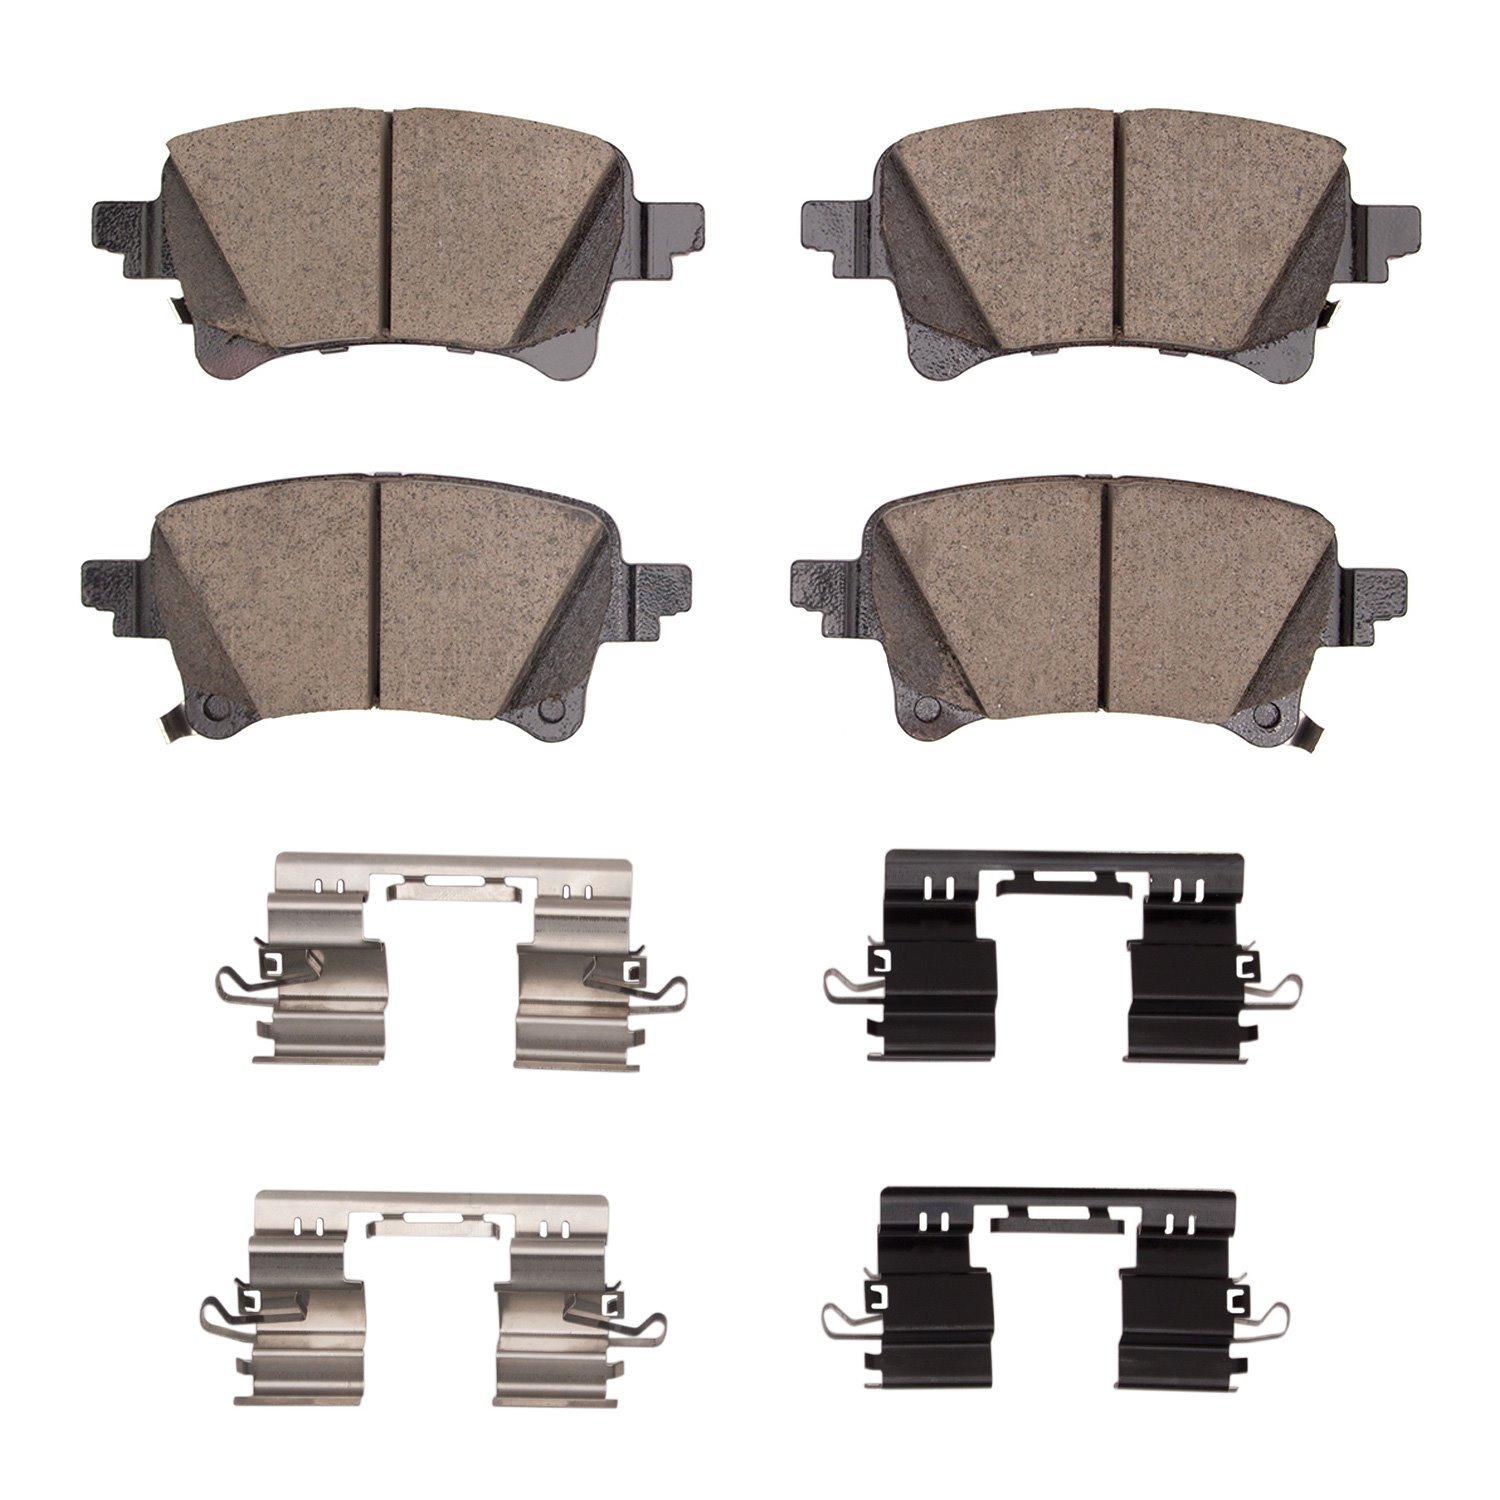 5000 Advanced CeMoparic Brake Pads & Hardware Kit,